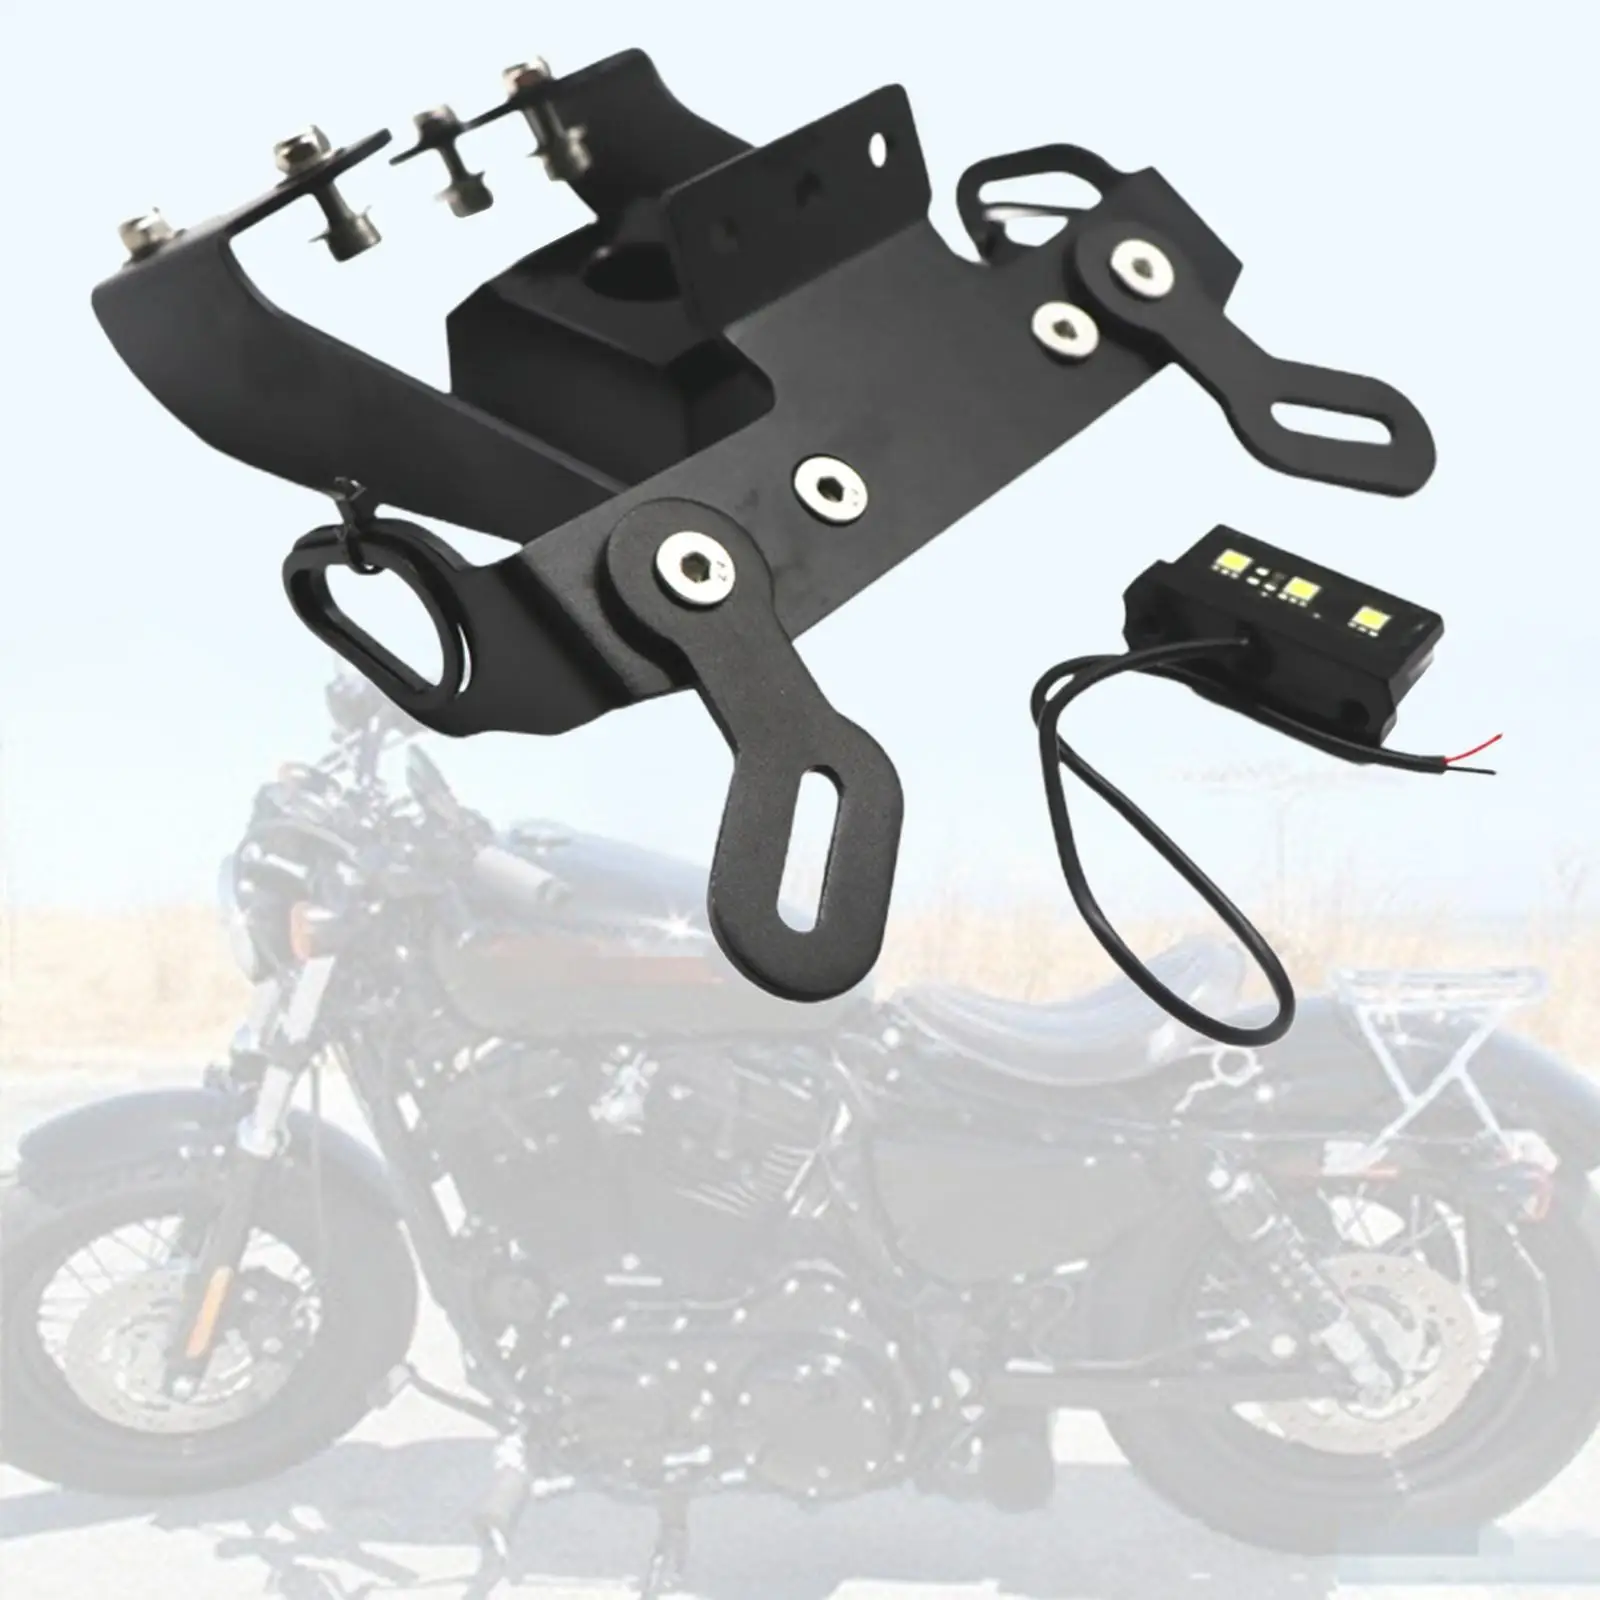 Motorcycle Rear Plate Holder   Mount Bracket    17-20 FZ-09 17-18